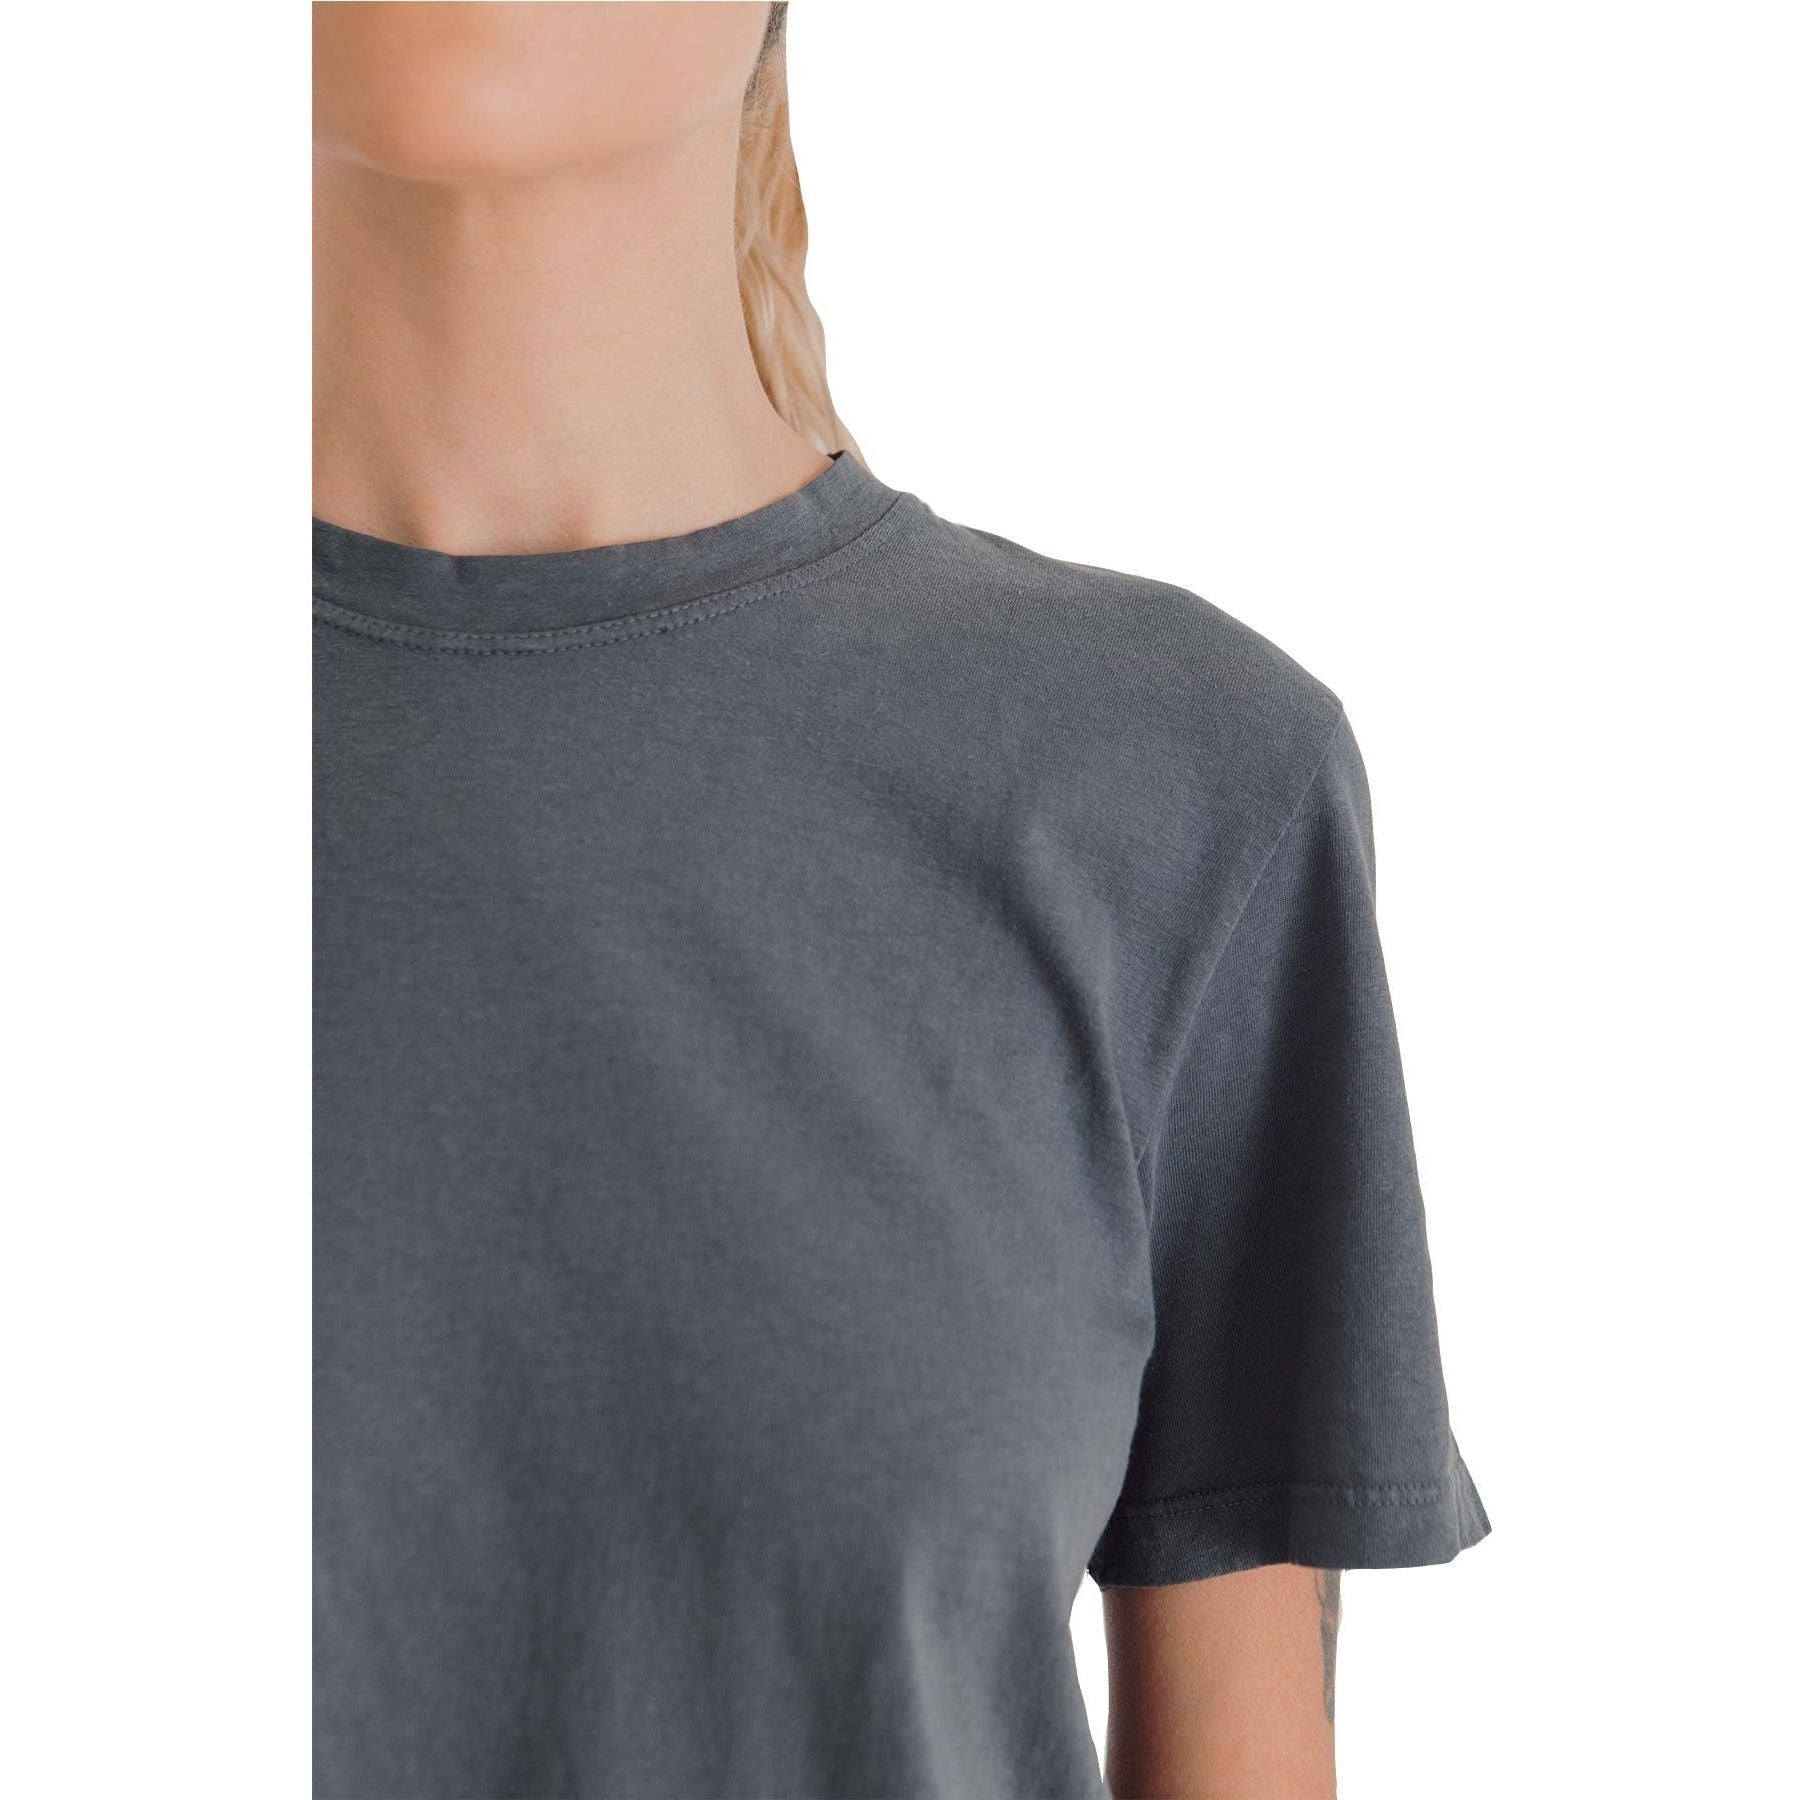 Jungmaven U T-Shirts Basic Tee 3.6oz, Diesel Grey